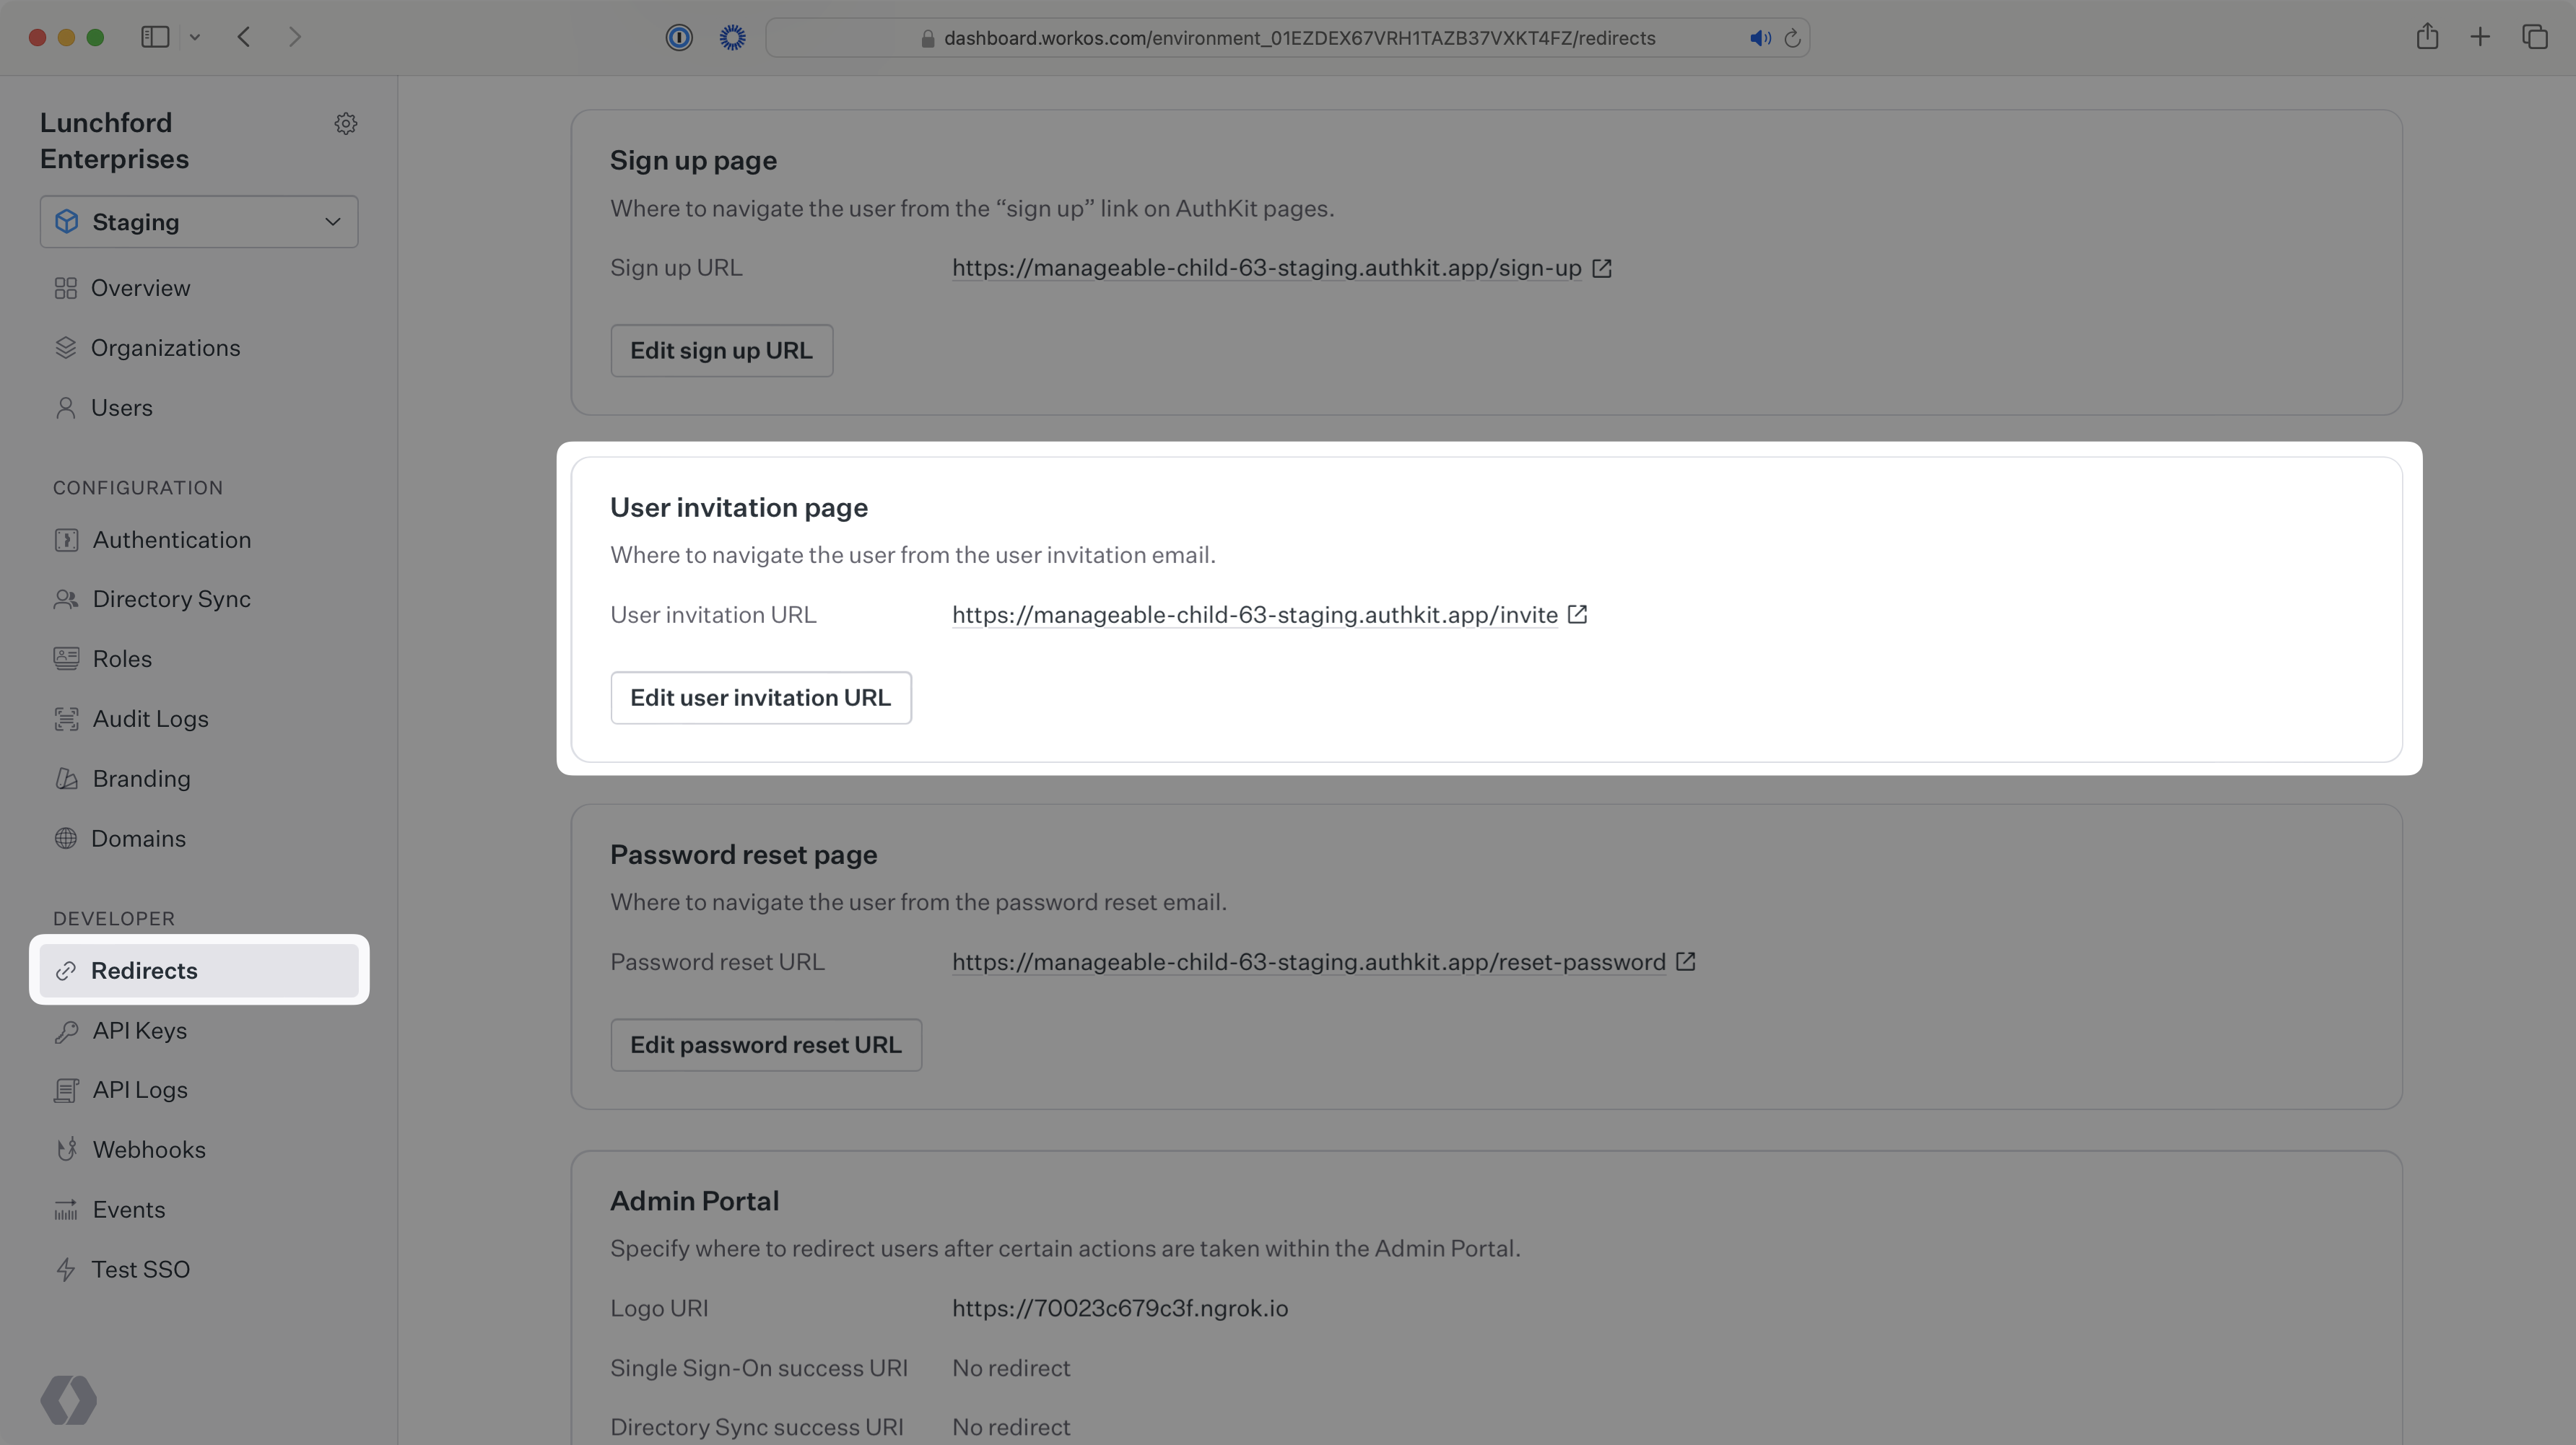 A screenshot showing the WorkOS Dashboard configuration card for user invitation URL